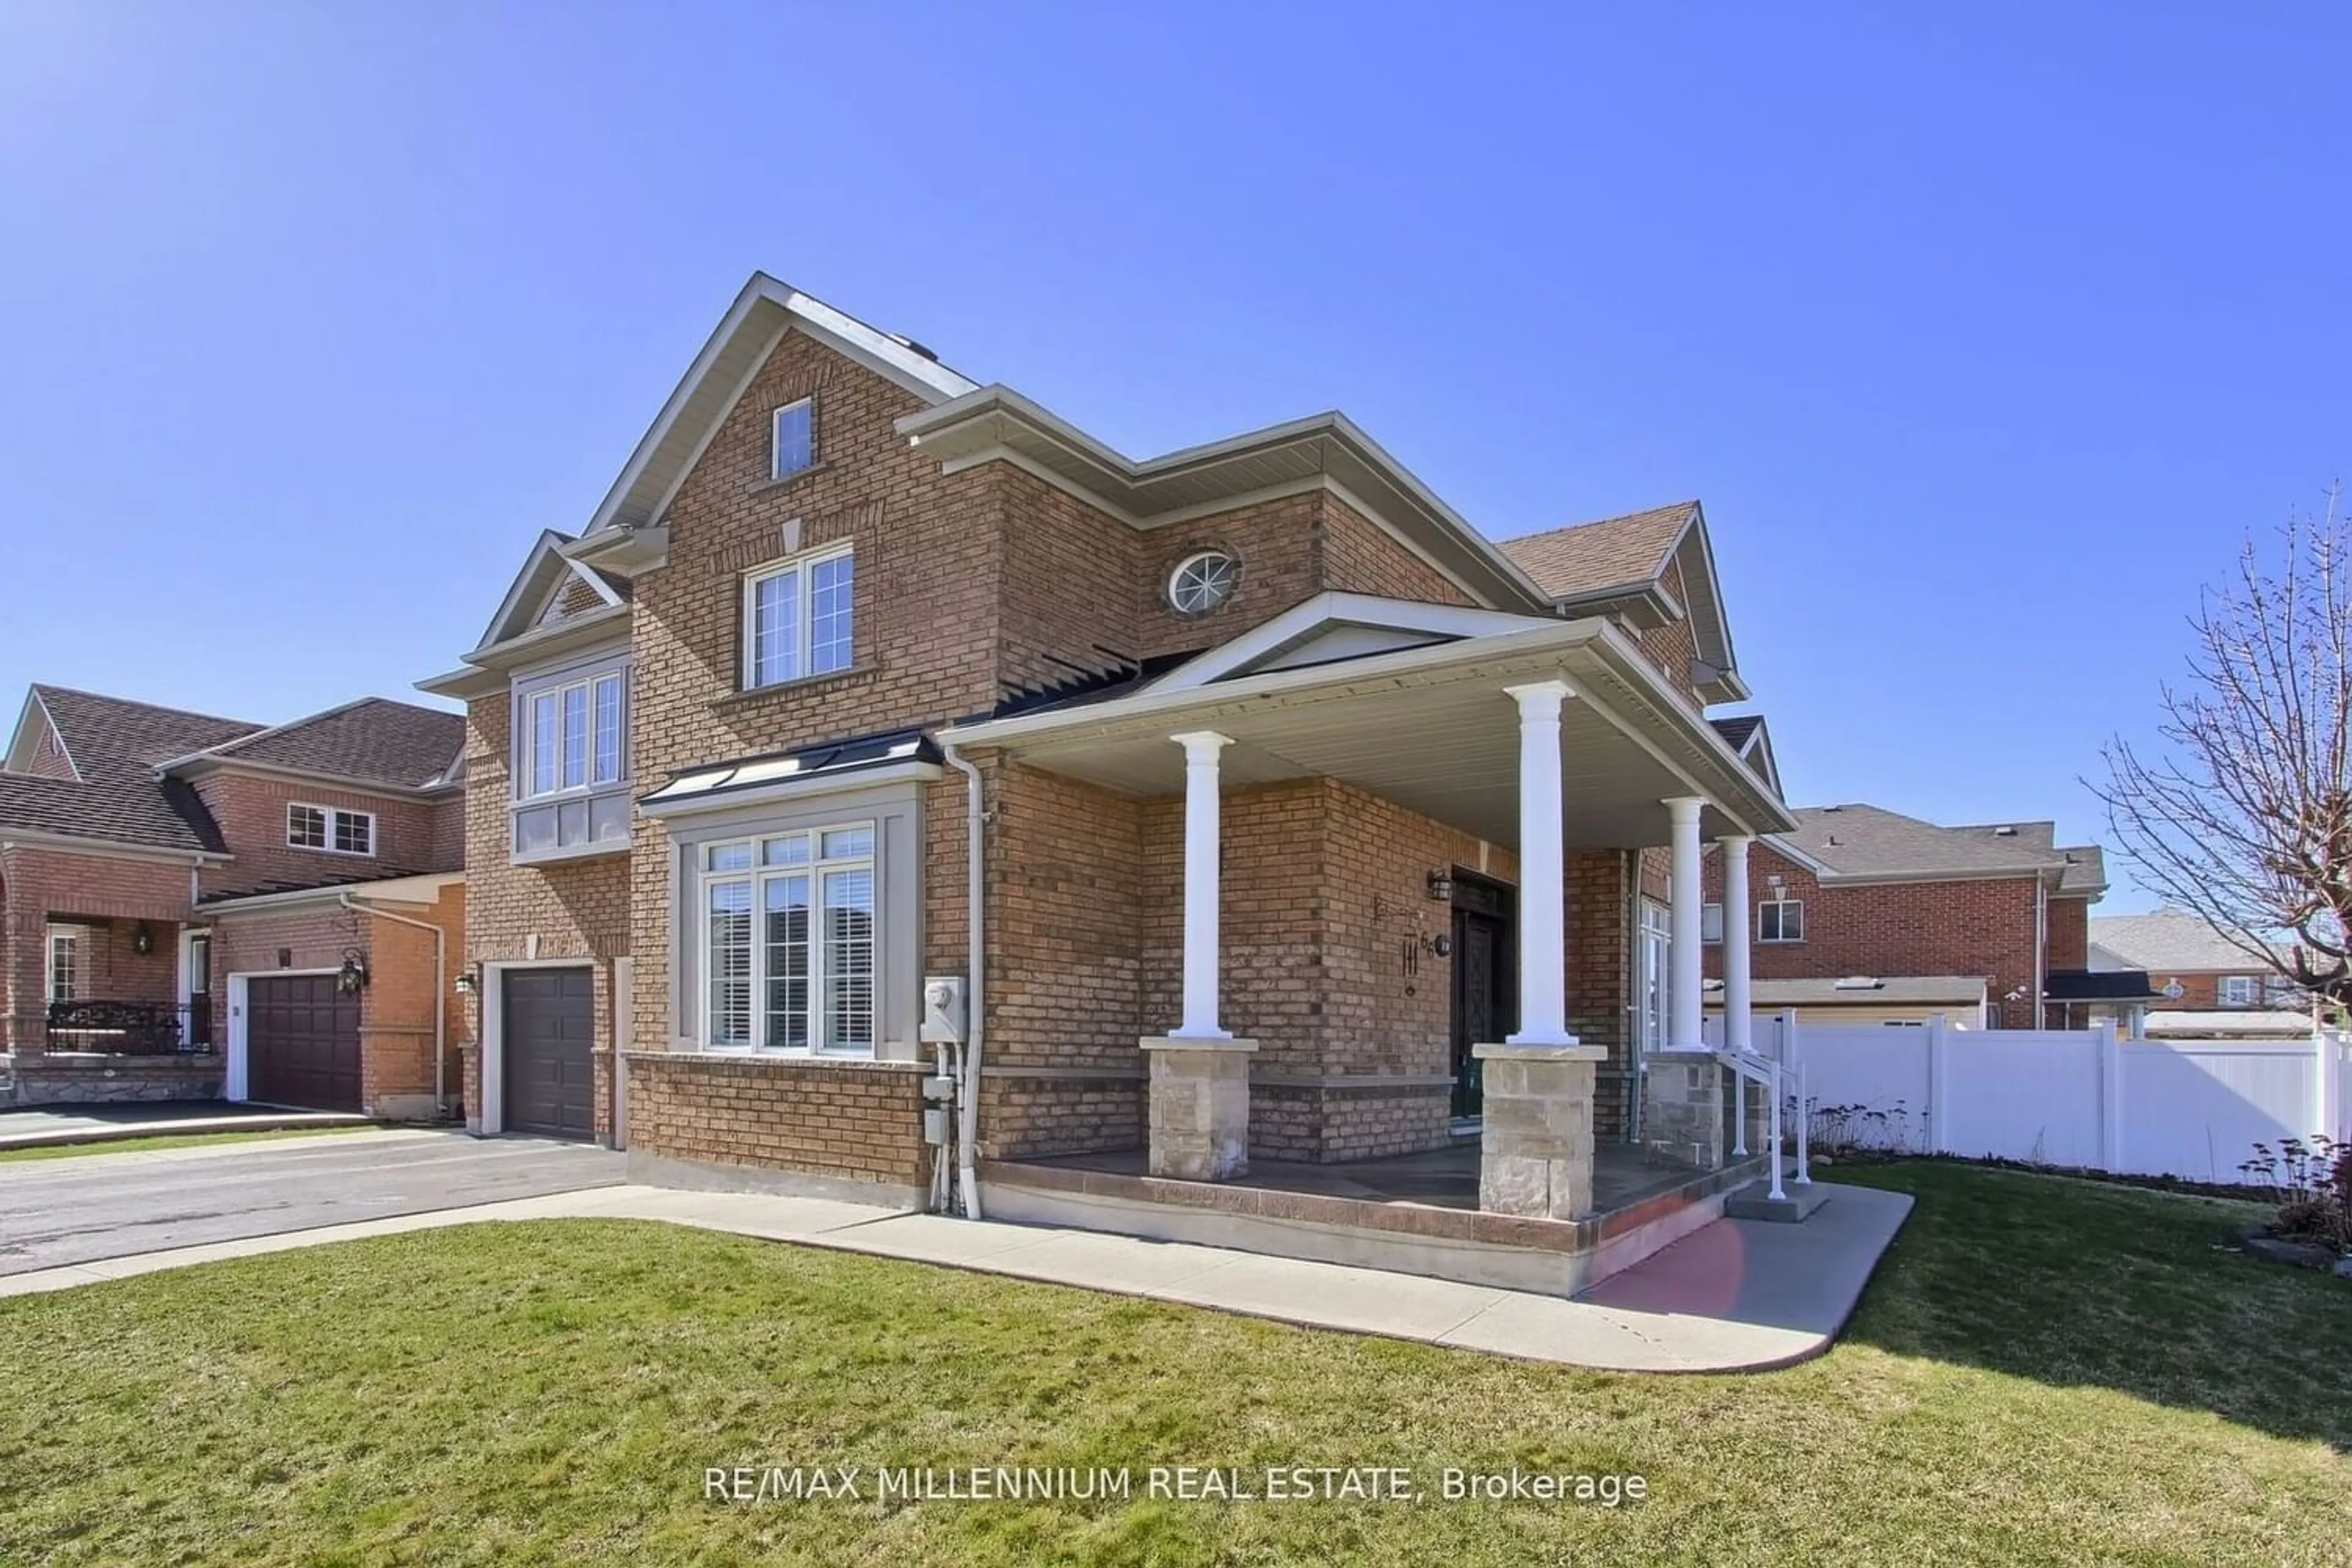 Home with brick exterior material for 66 Wild Indigo Cres, Brampton Ontario L6R 2K3